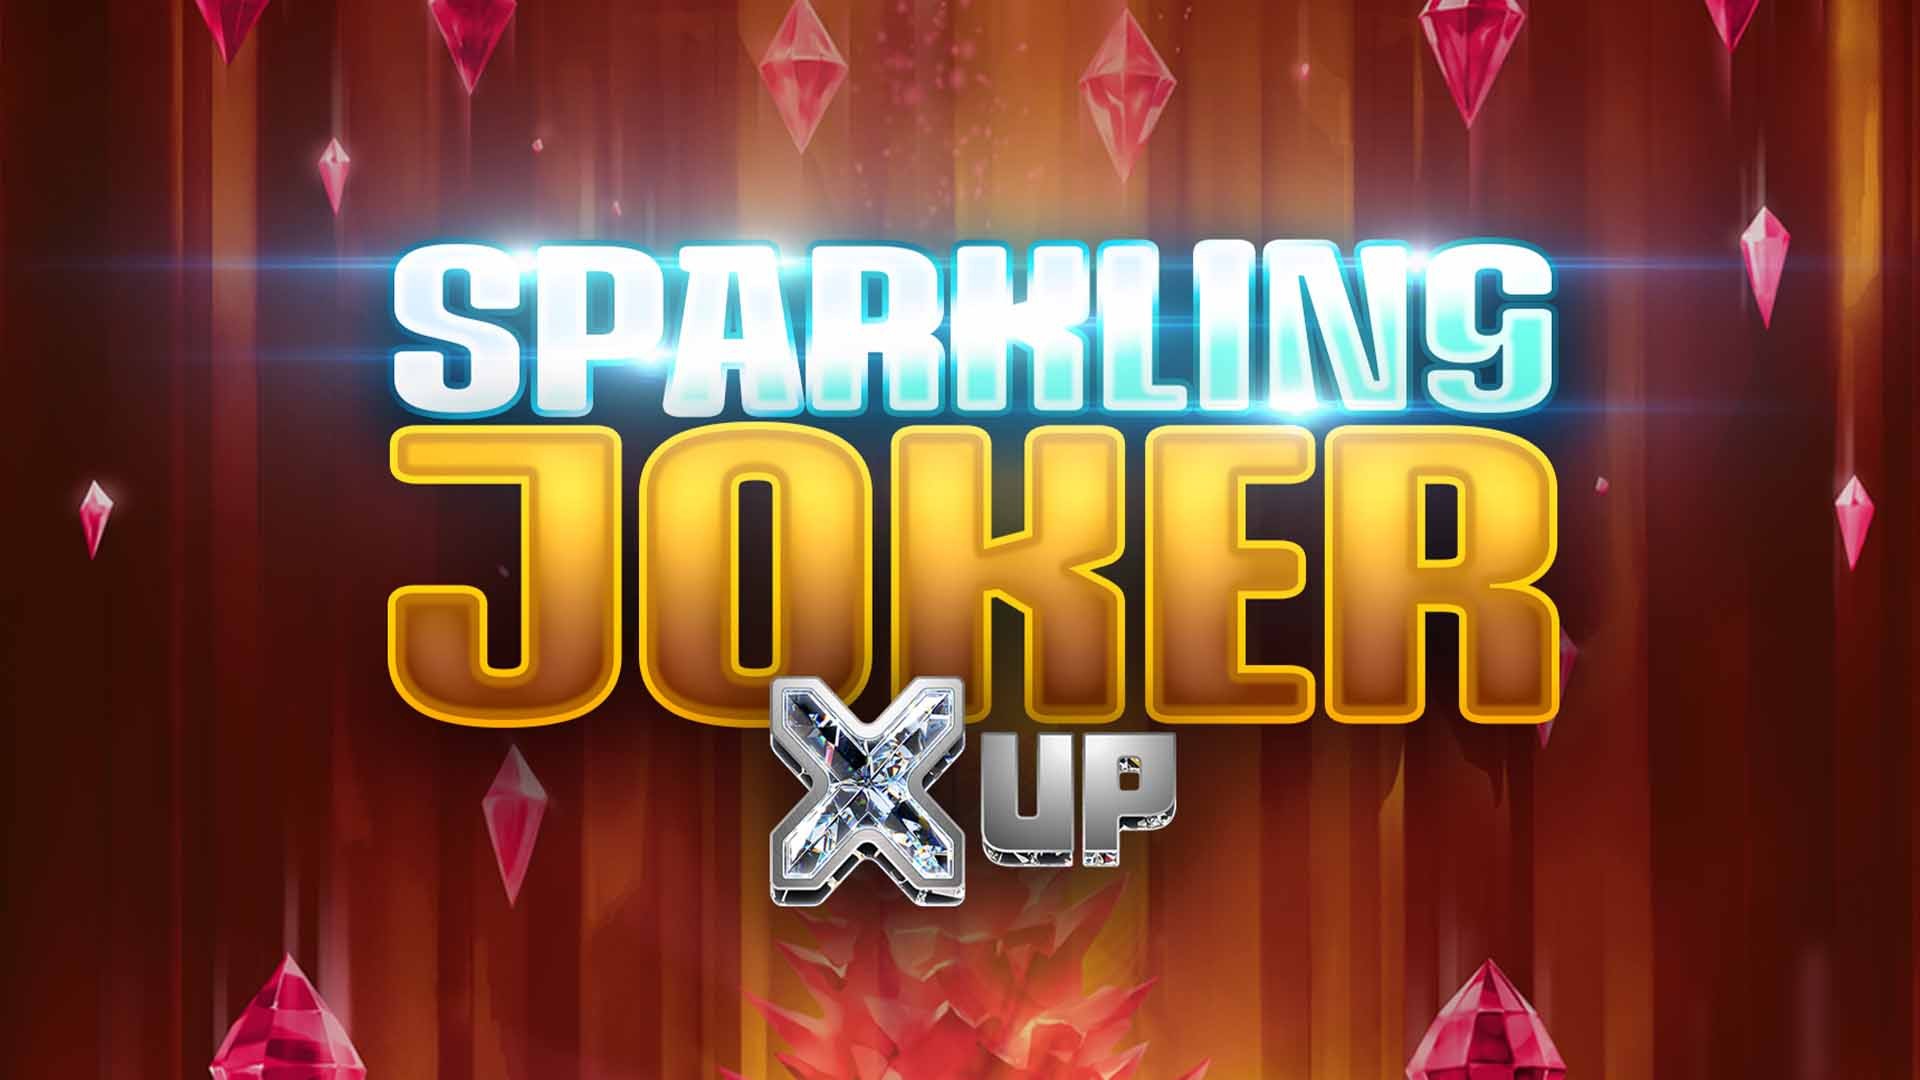 Sparkling Joker X UP